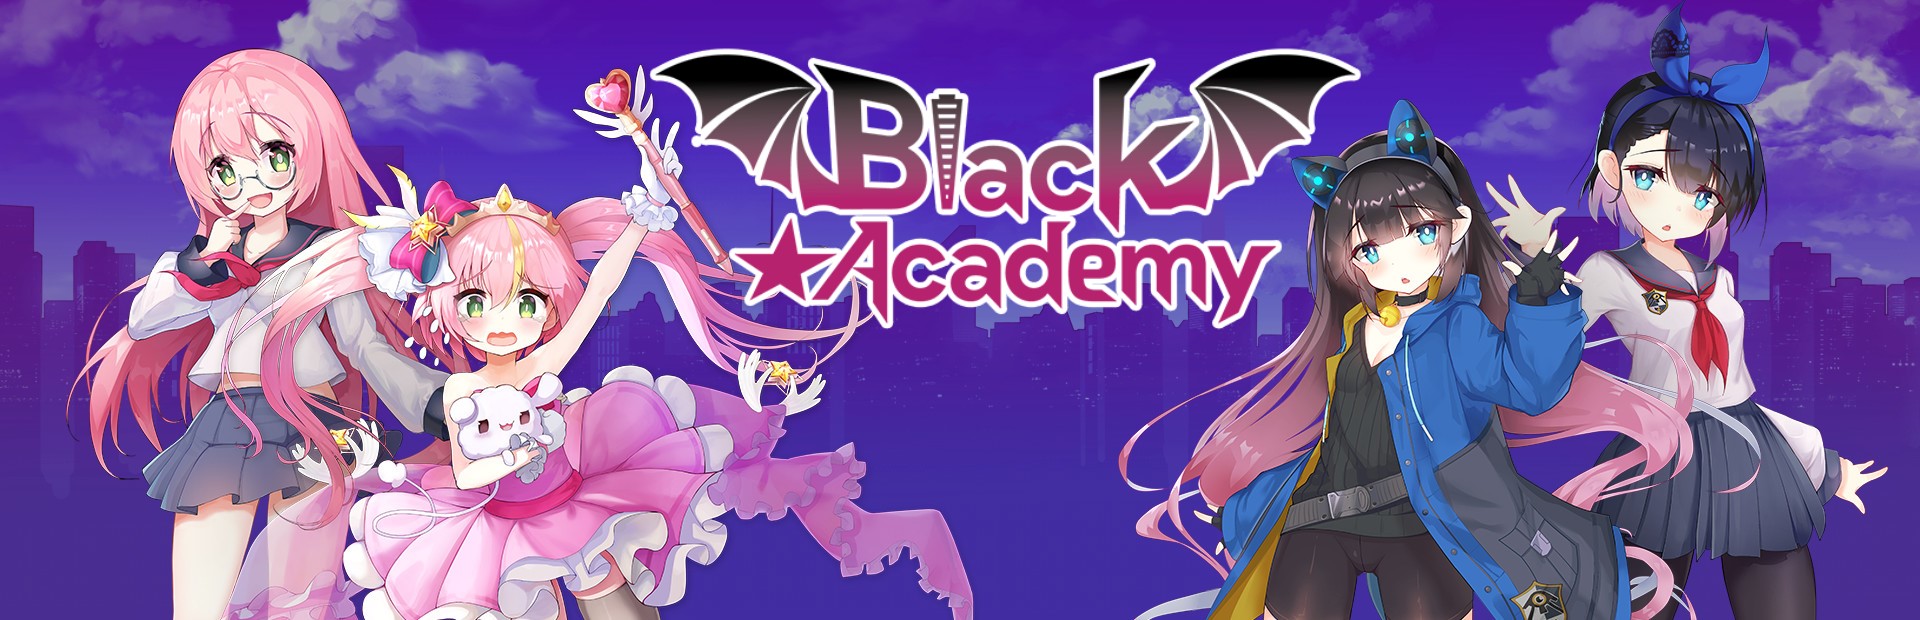 Free Black Porn Hentai - Download Free Hentai Game Porn Games Black Academy